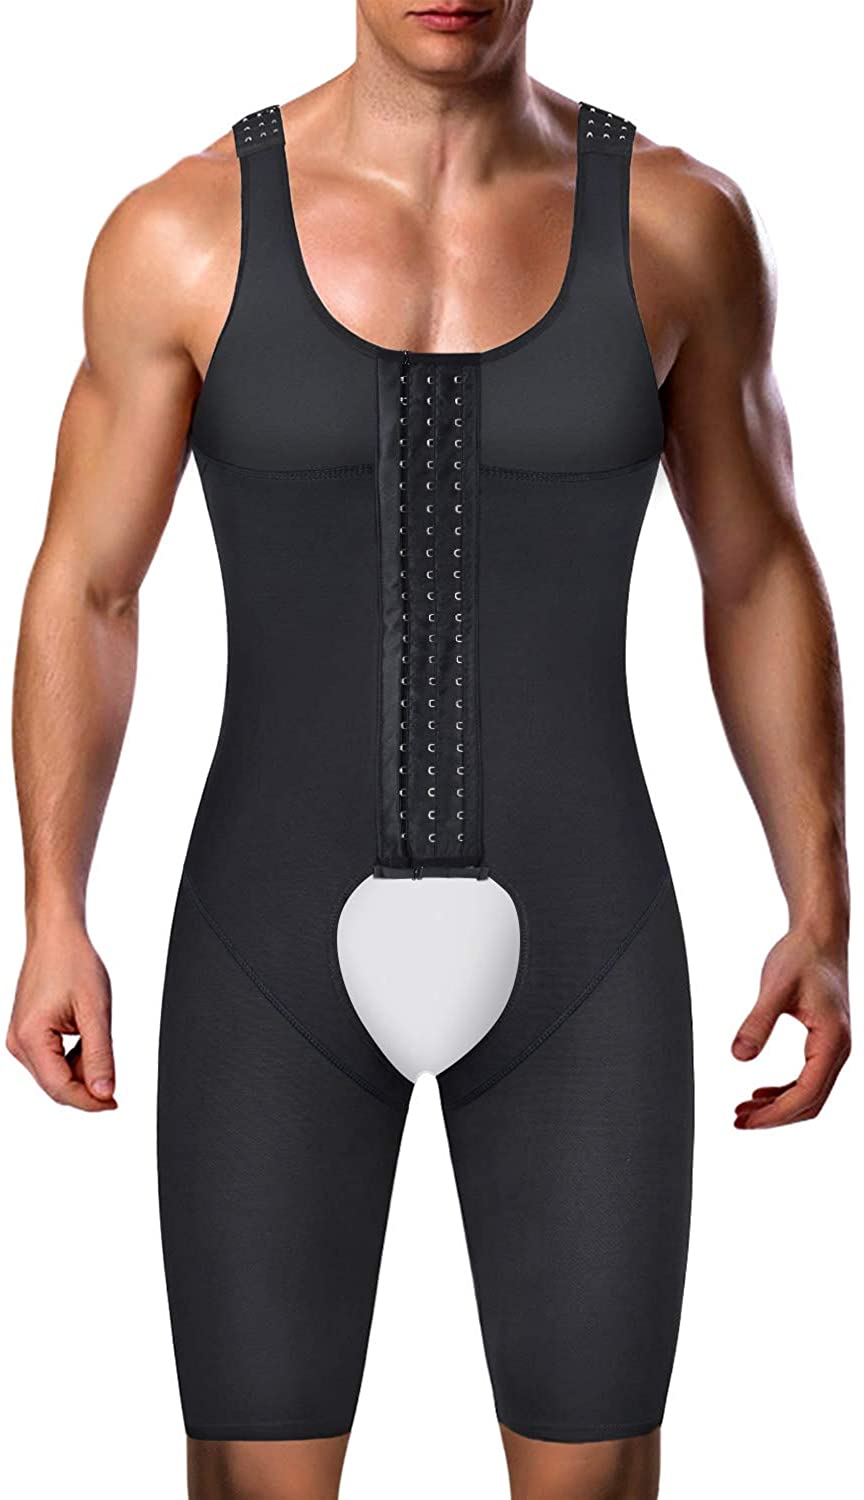 RIBIKA Men Compression Bodysuit Shaper Tummy Control Suit Weight